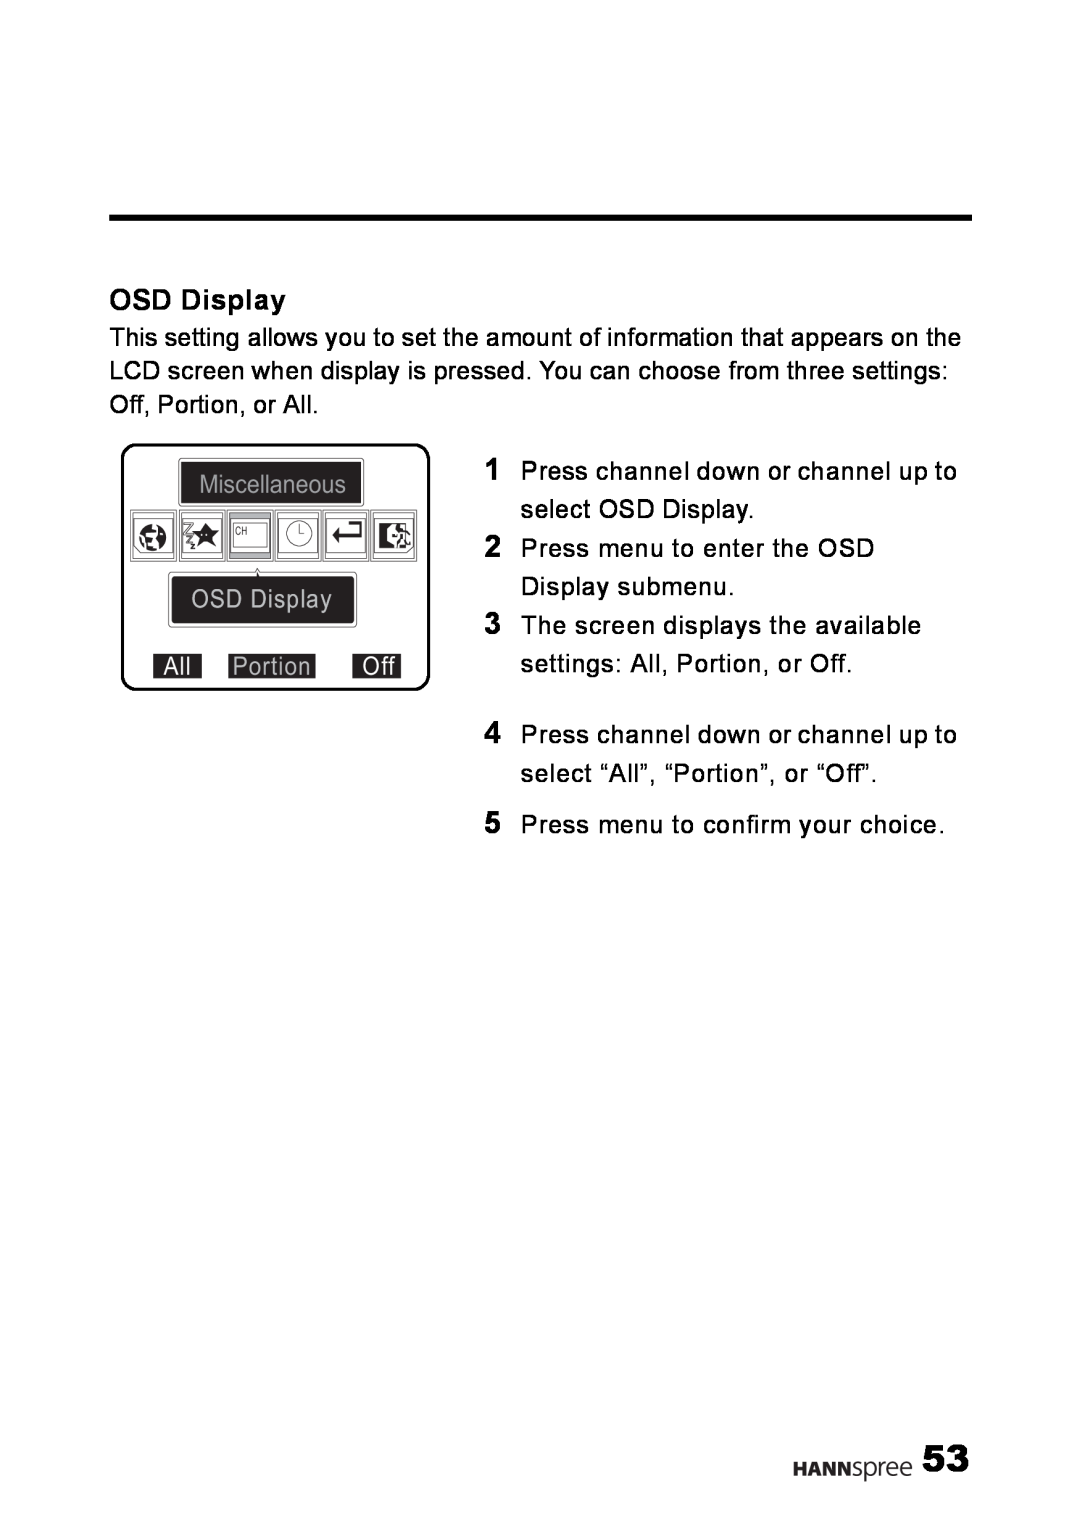 HANNspree LT02-12U1-000 user manual Miscellaneous, OSD Display All Portion Off 